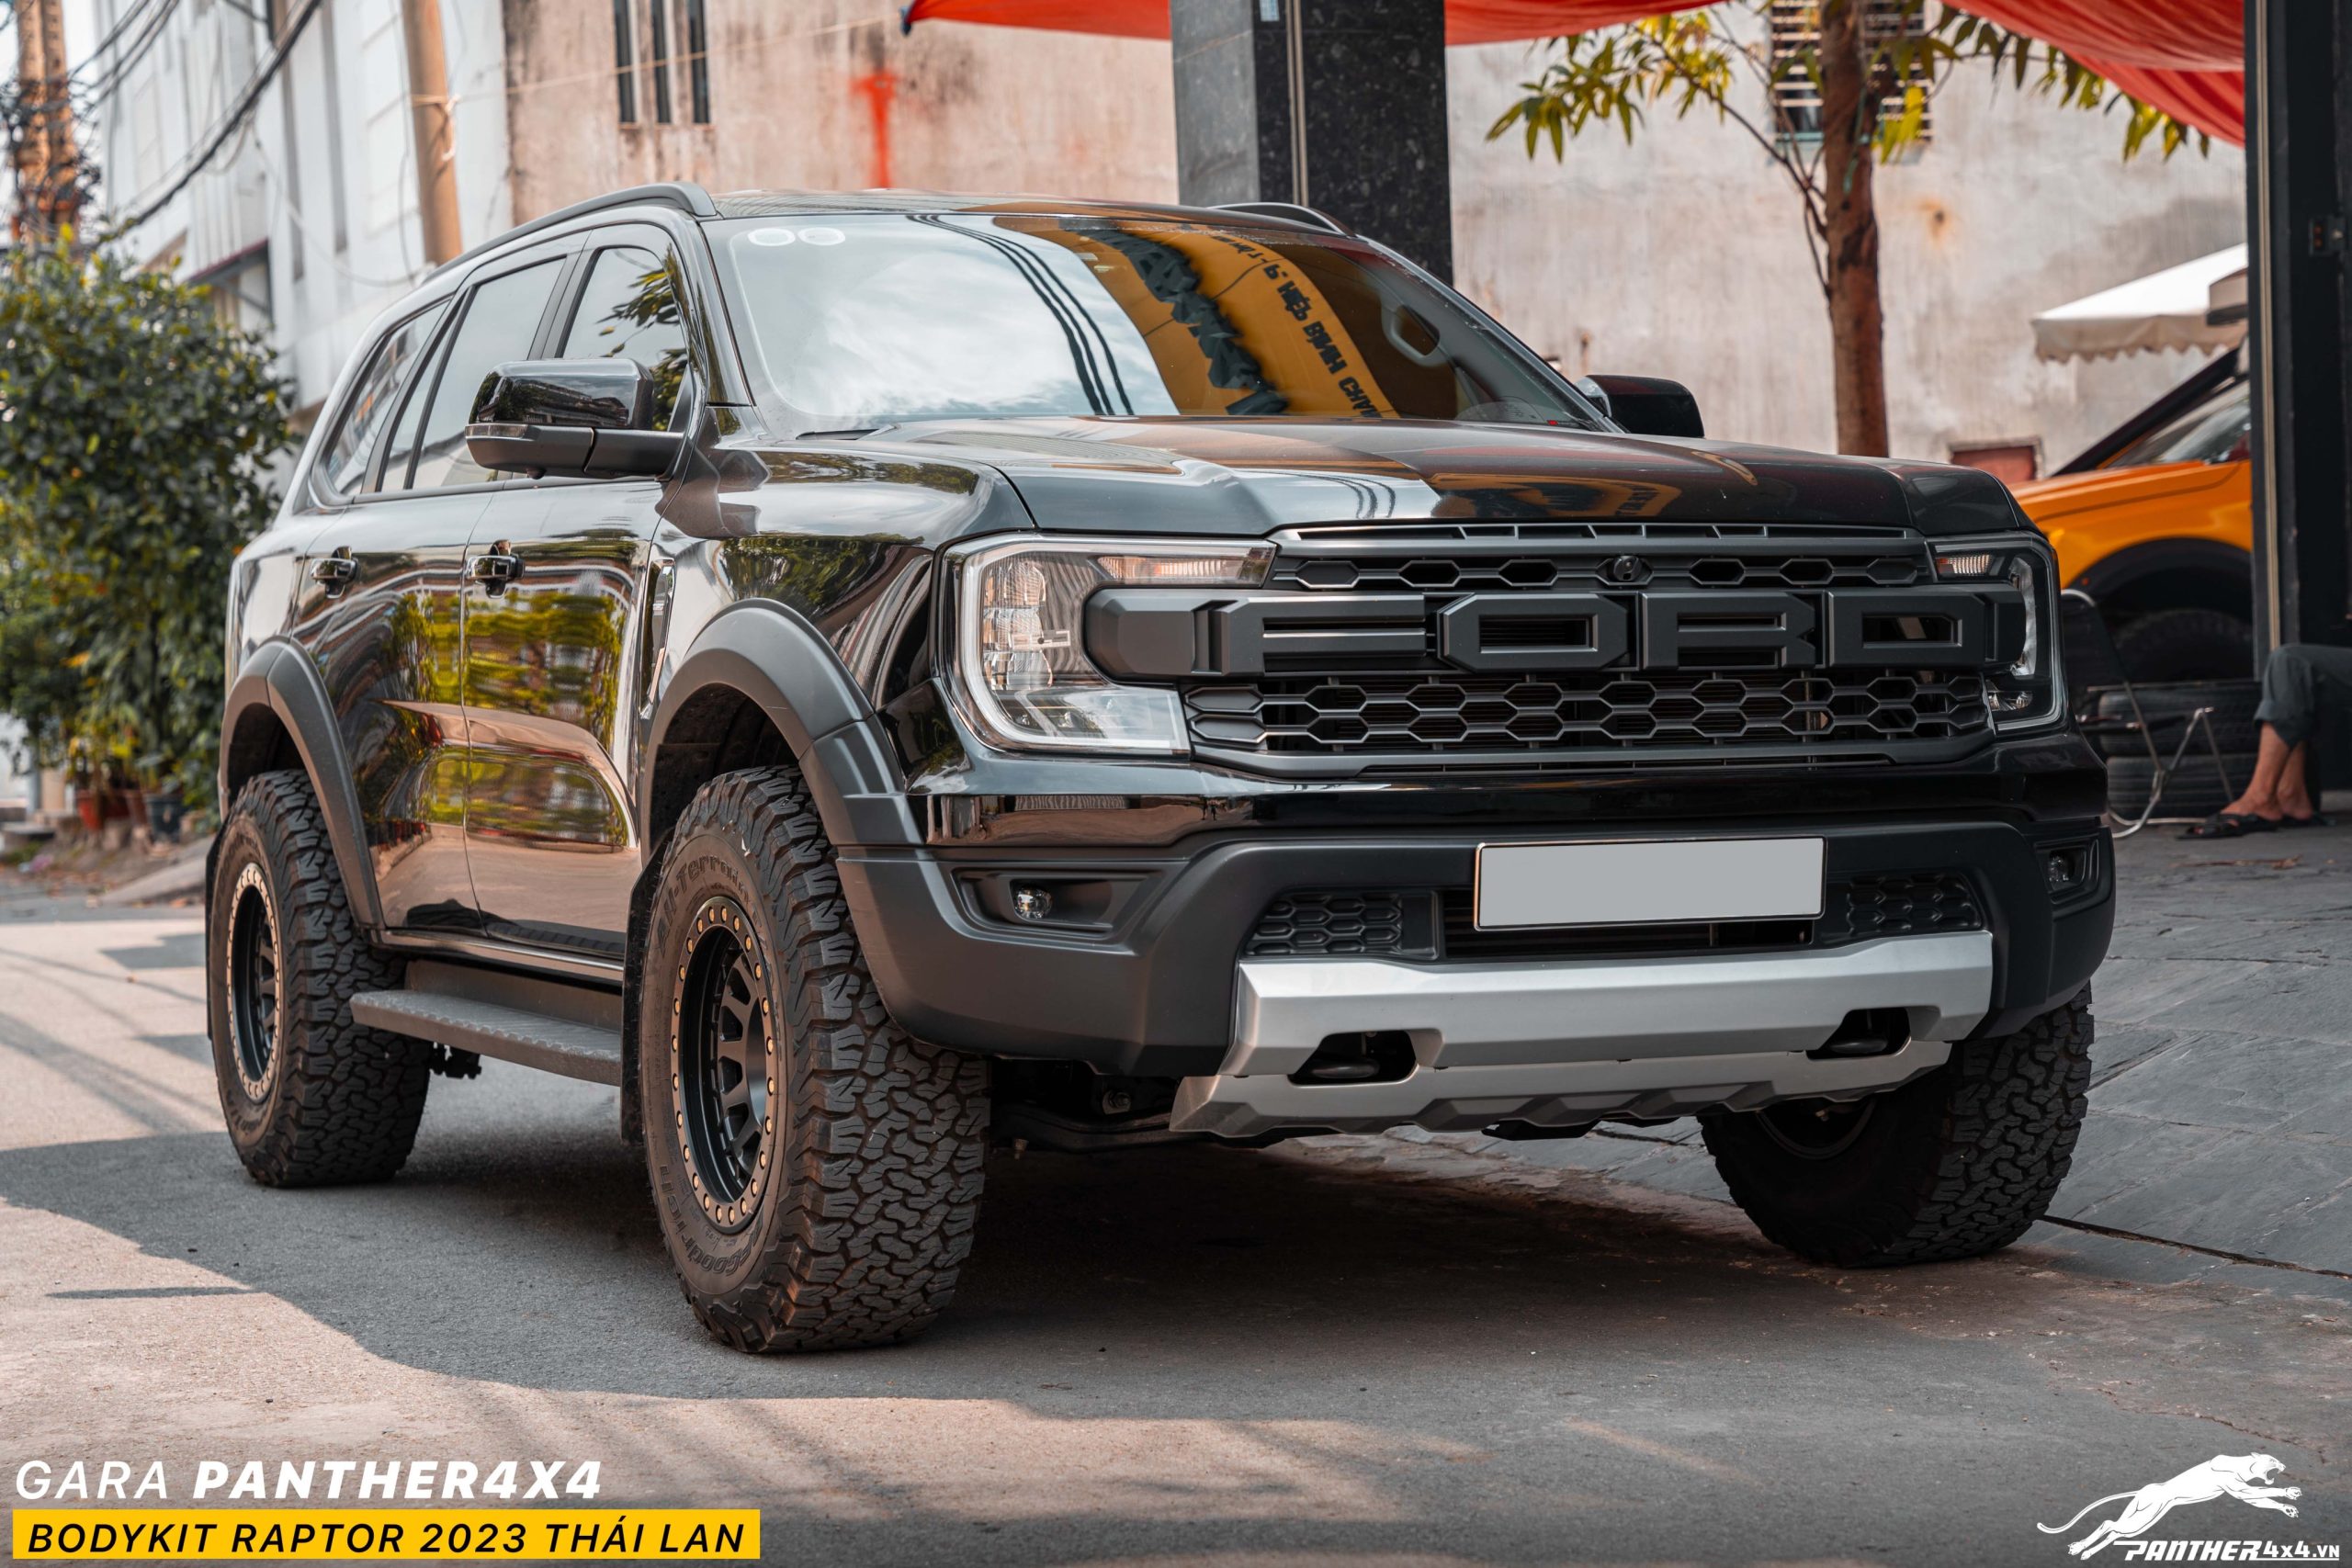 Bodykit Raptor 2023 NEXT GEN cho Ford Everest 2023